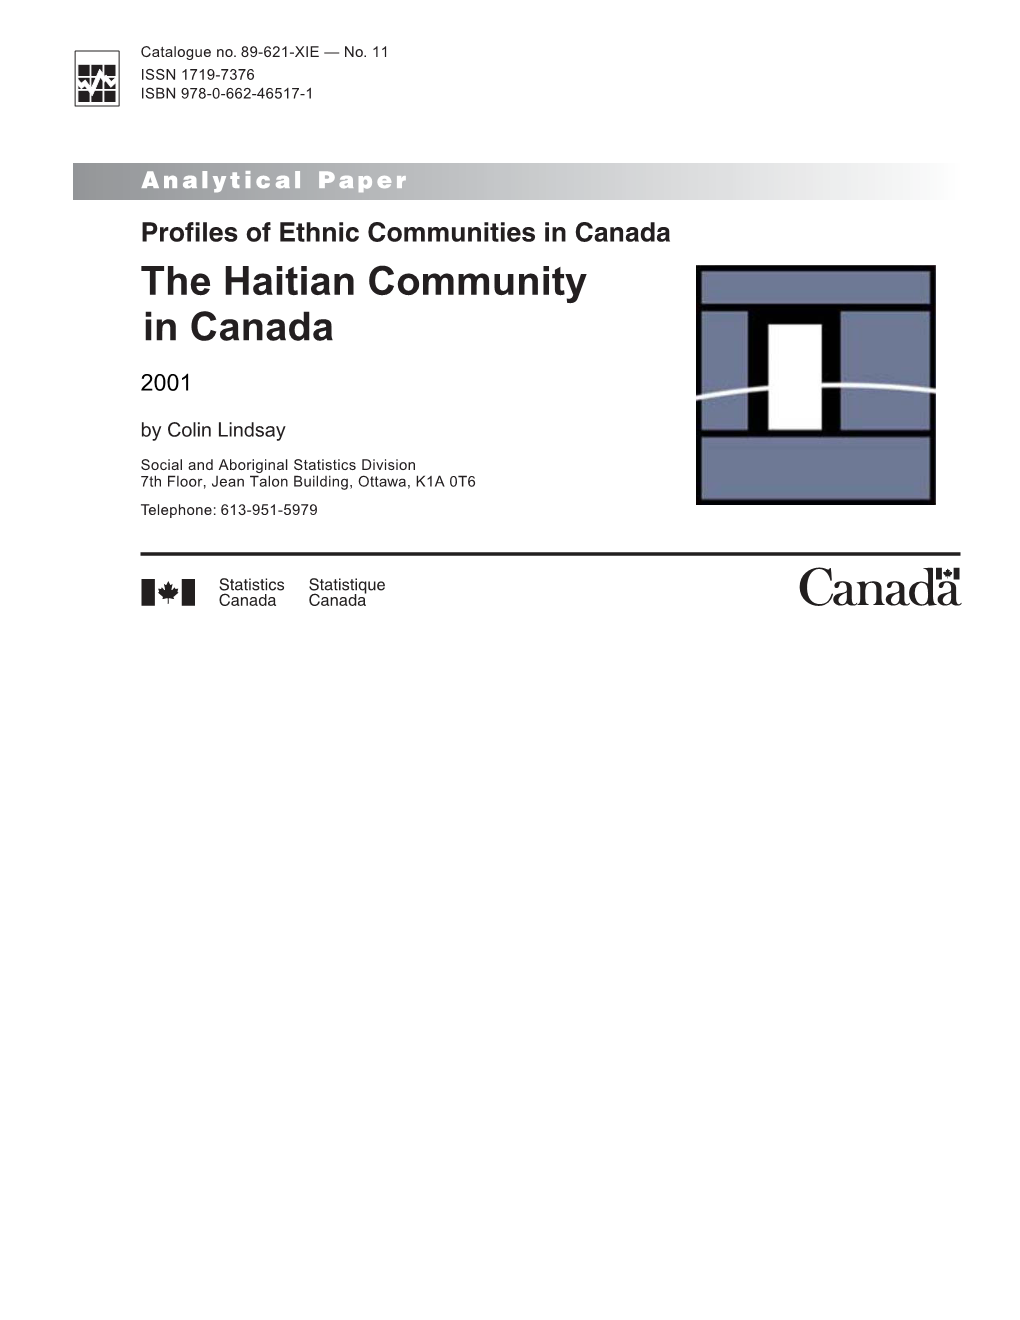 The Haitian Community in Canada